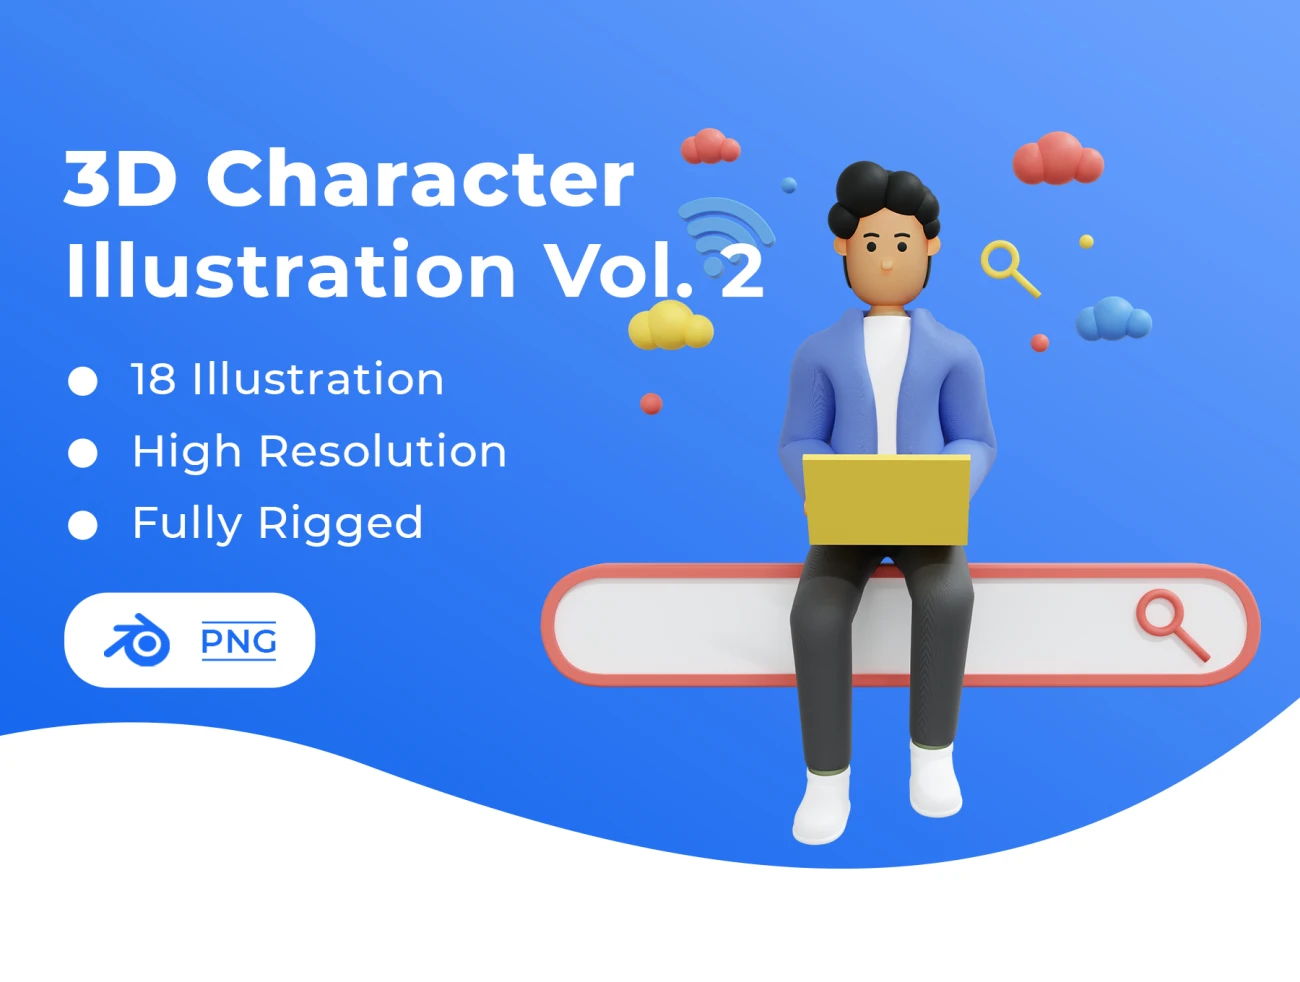 简约3D人物模型插画素材下载 3D Character illustration Vol. 2 .blender插图1